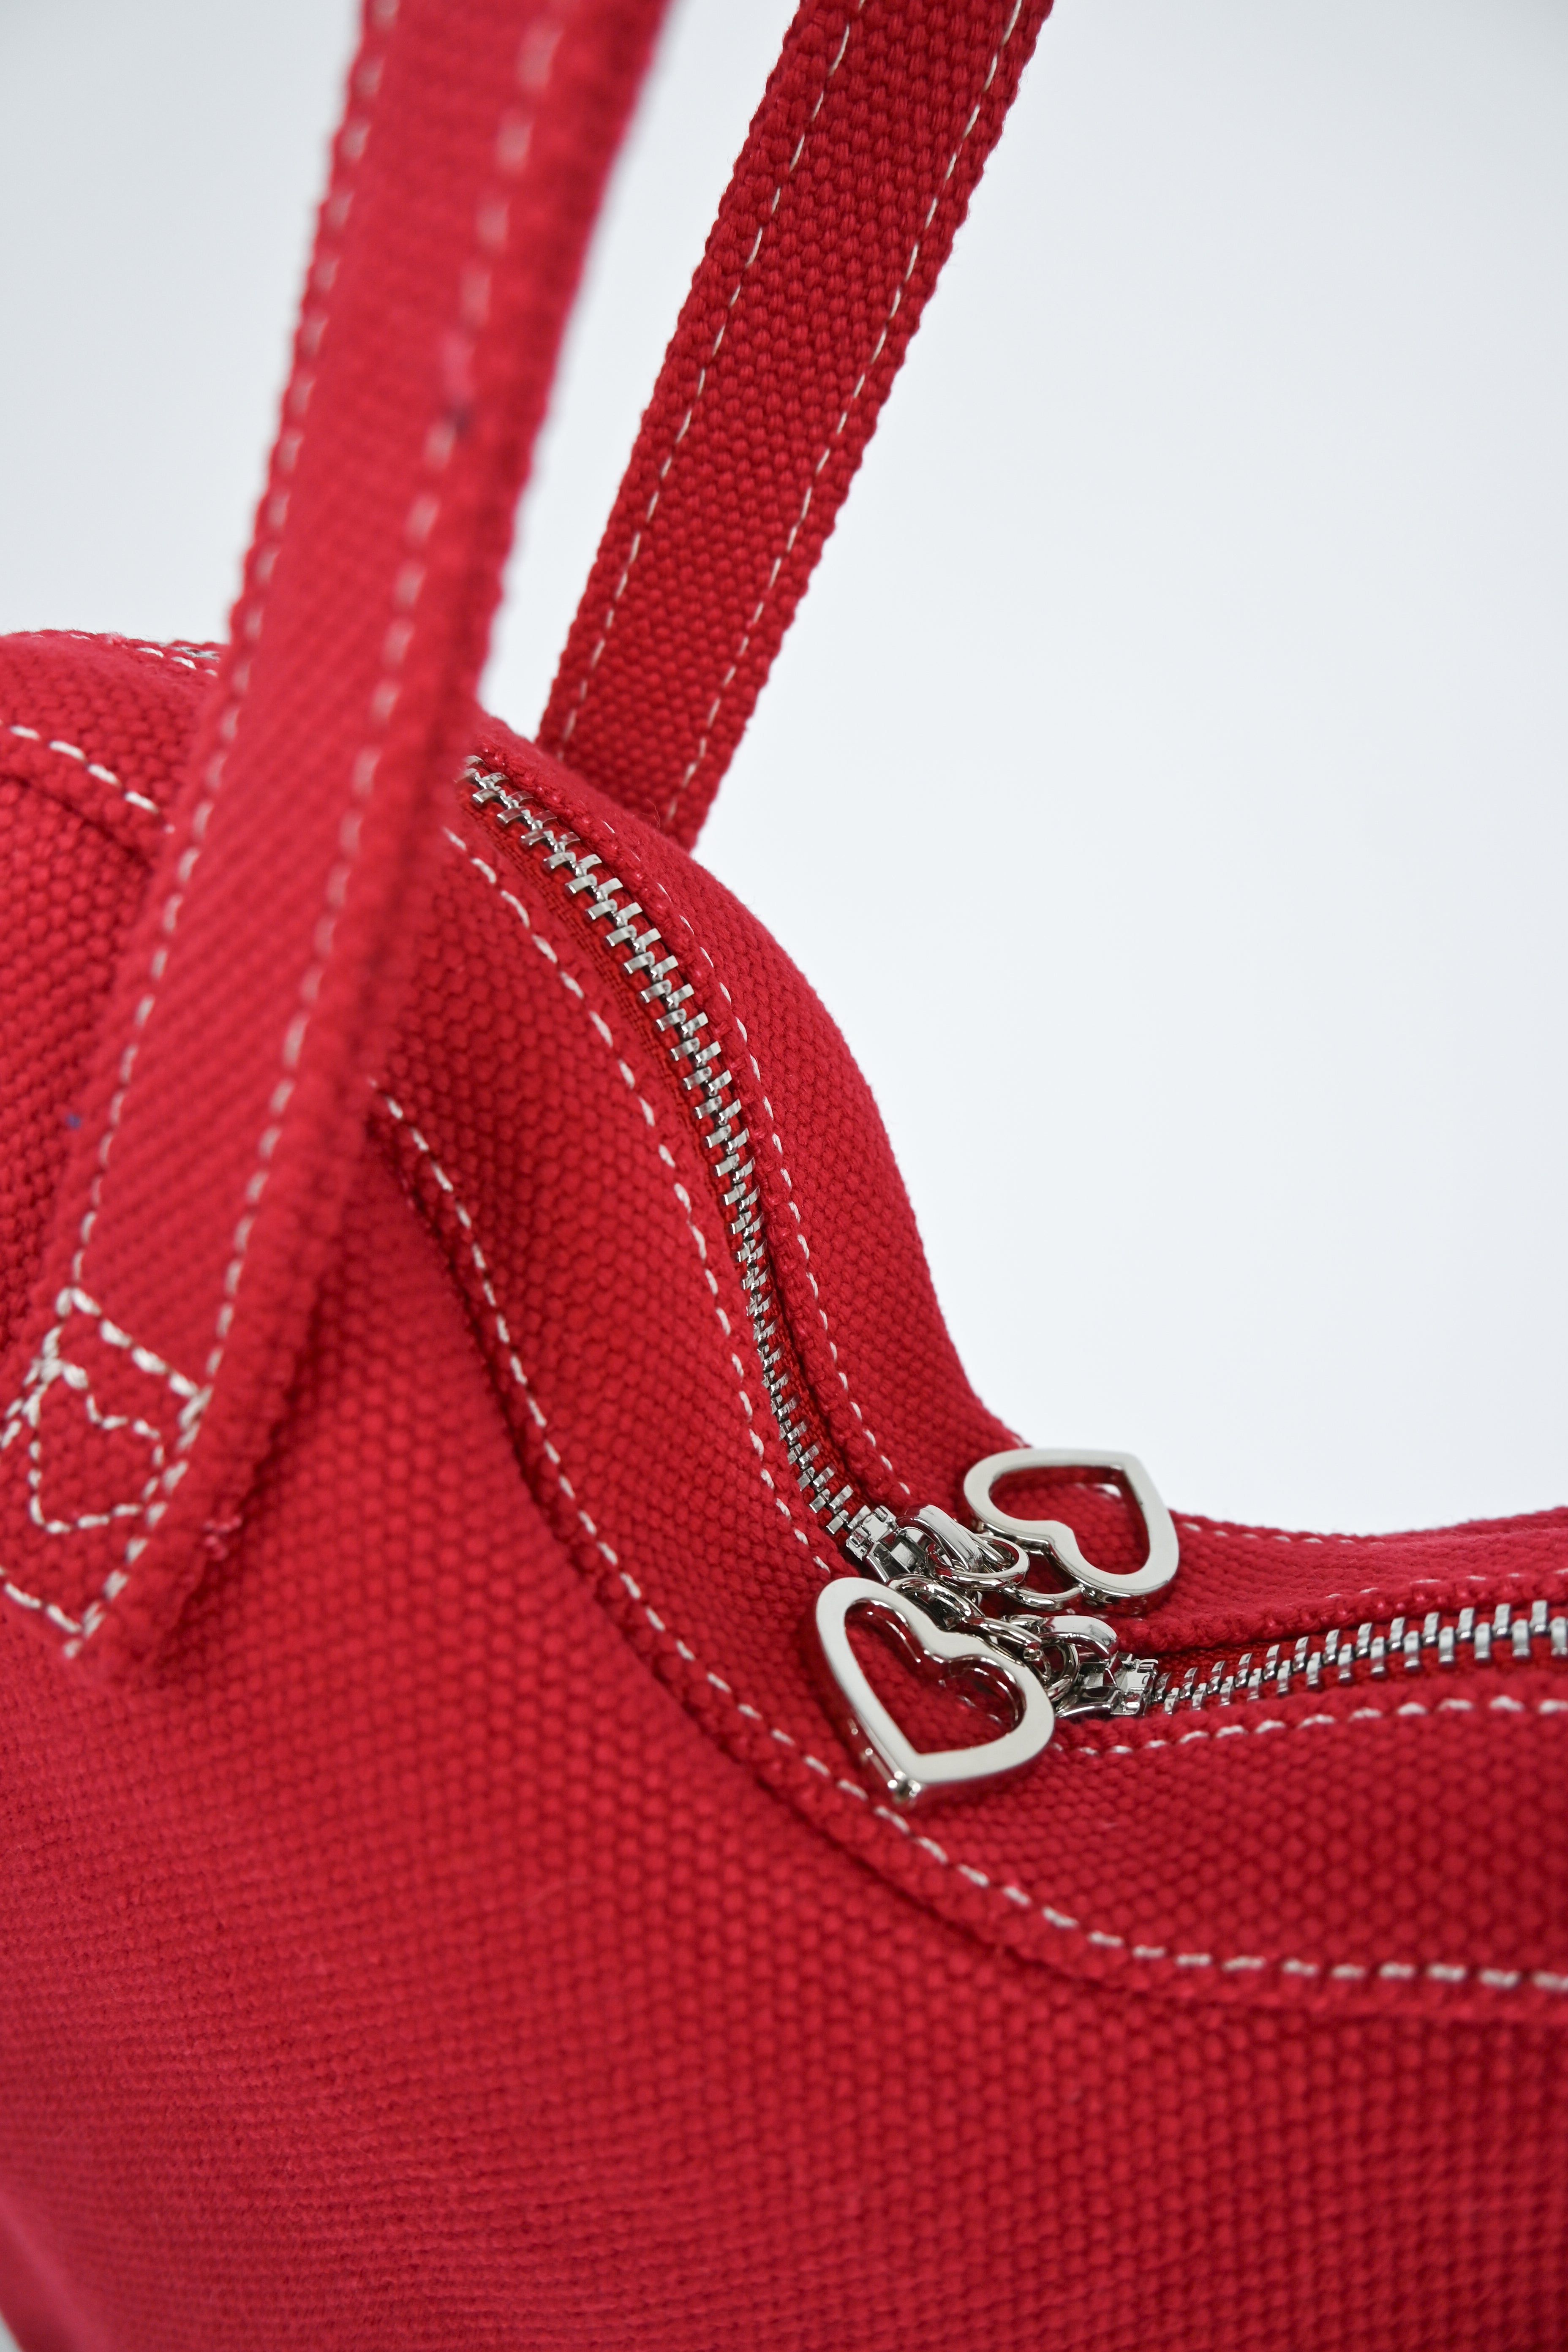 Heart Bag - The "Little Heartbreaker" (RED)